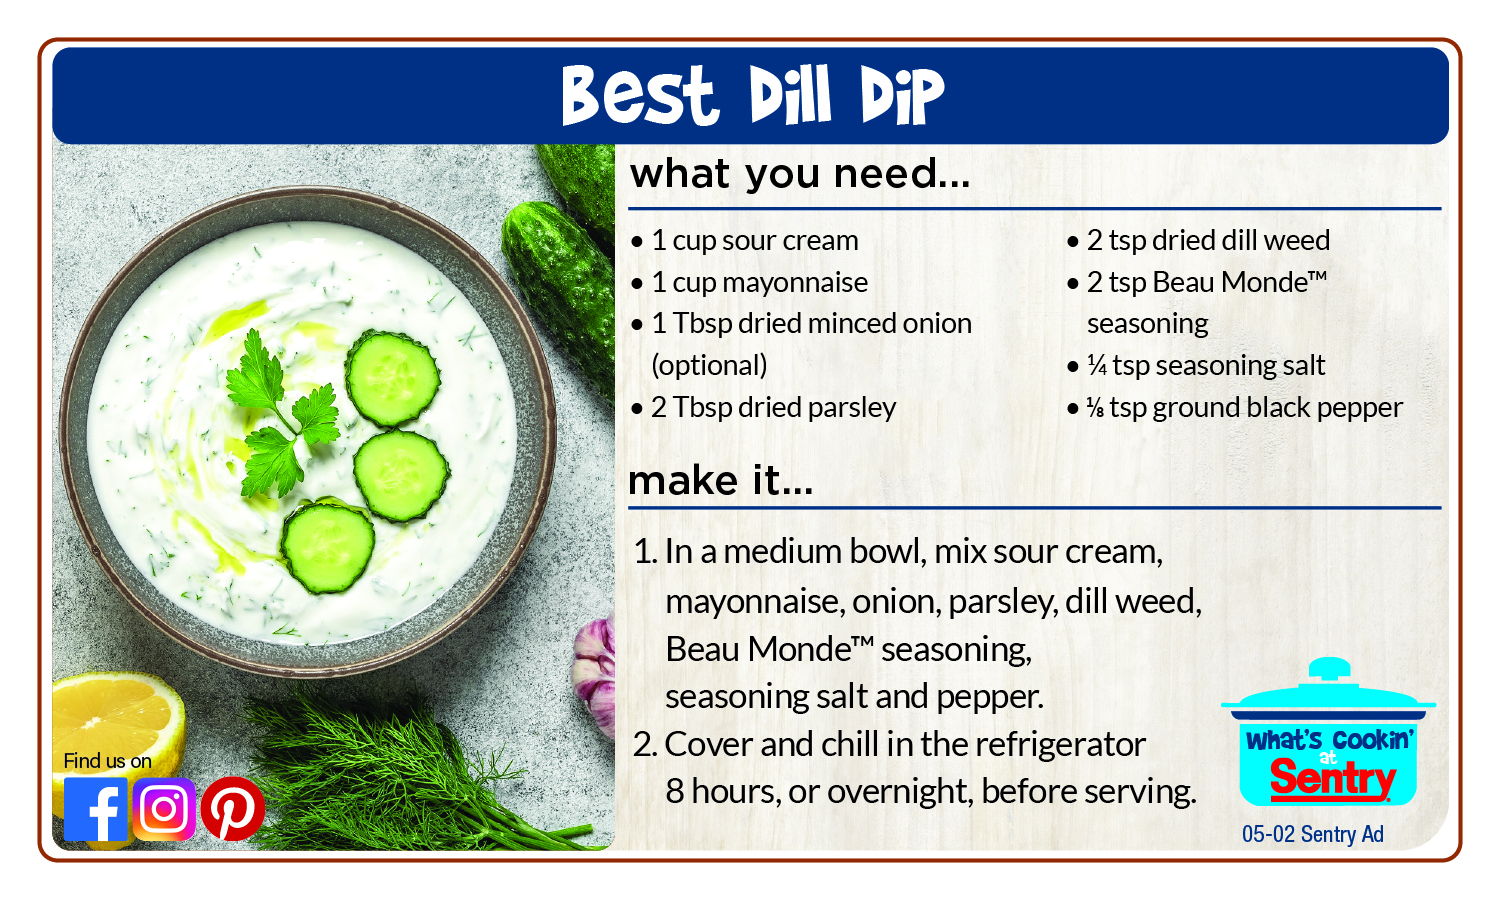 Best Dill Dip